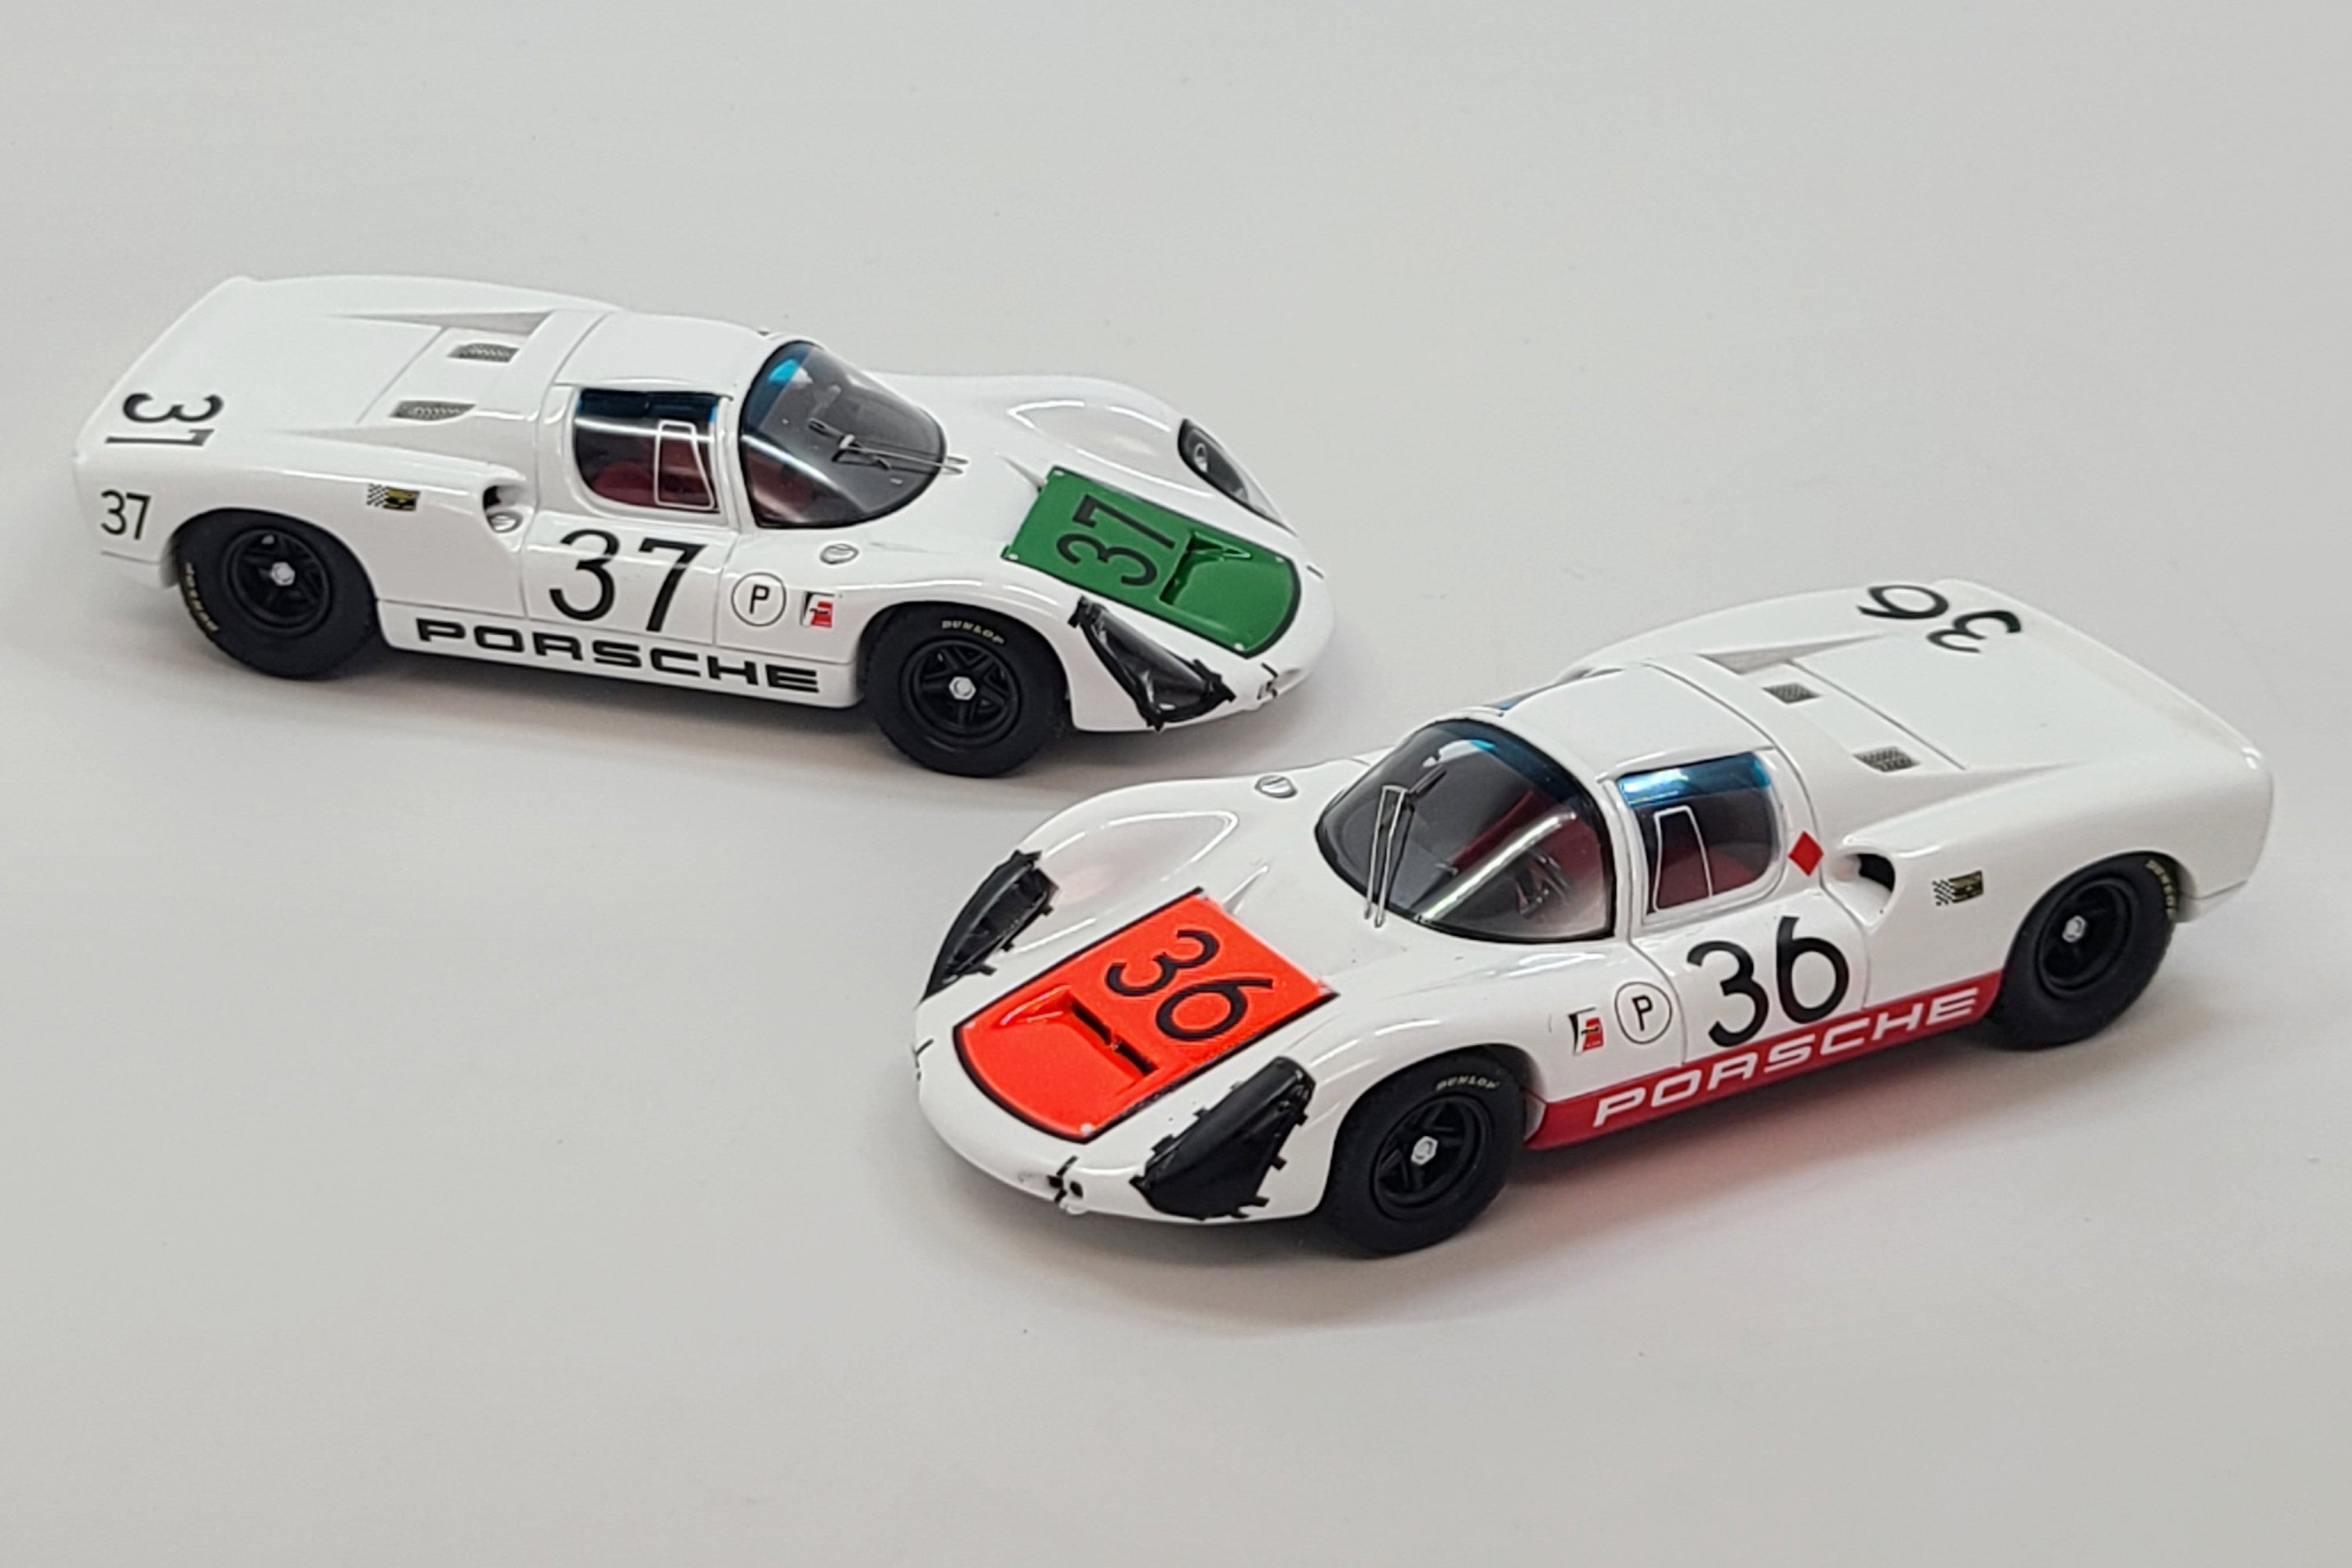 Porsche 910 (1967 Sebring 12 Hours) | 1:43 Scale Model Car by Spark